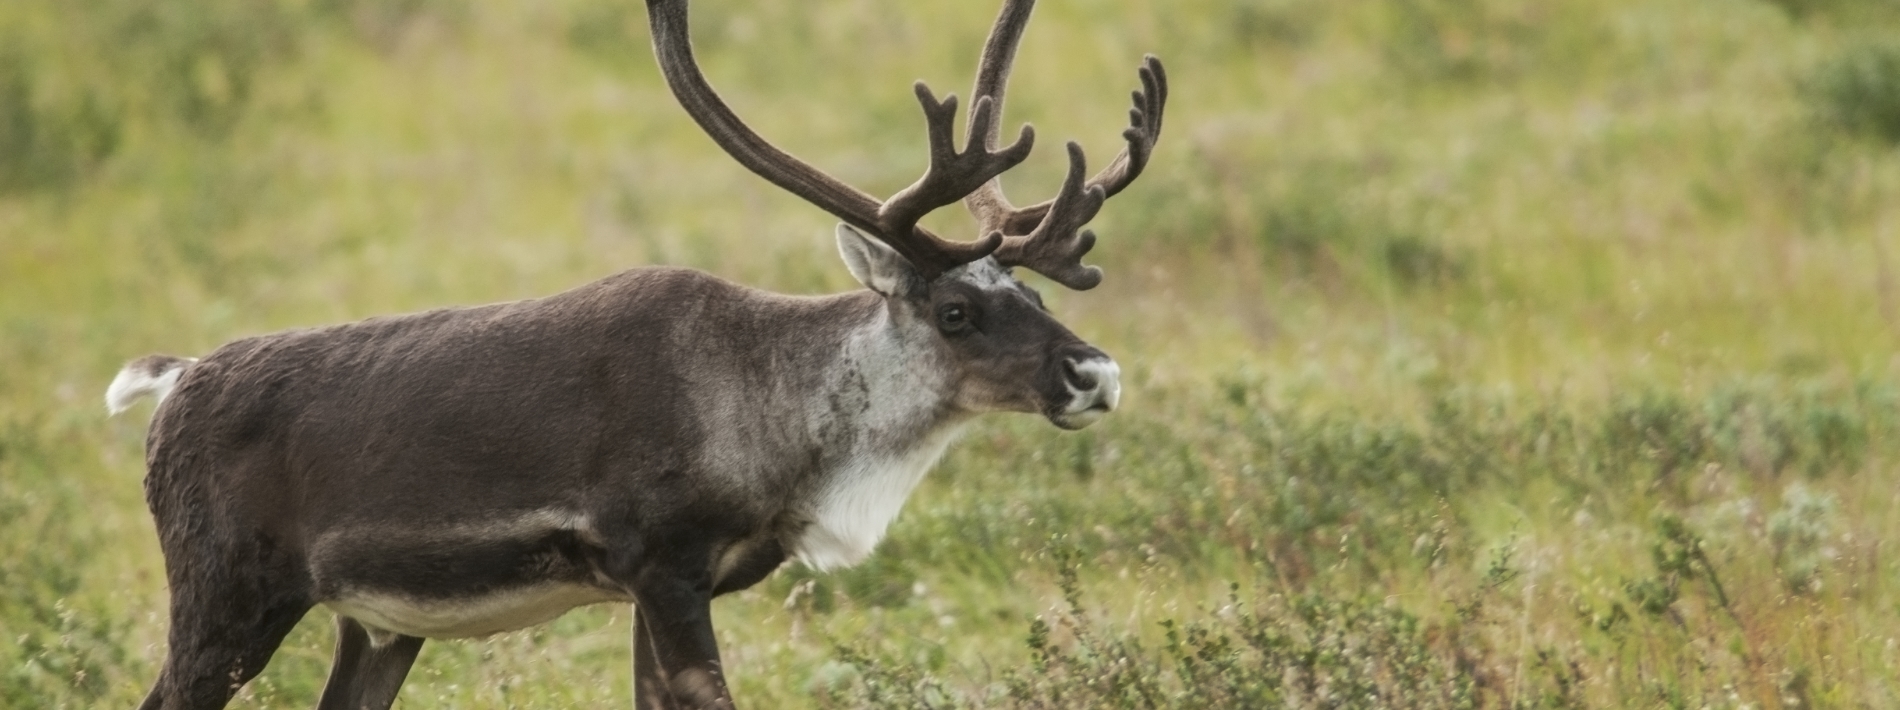 reindeer with grass